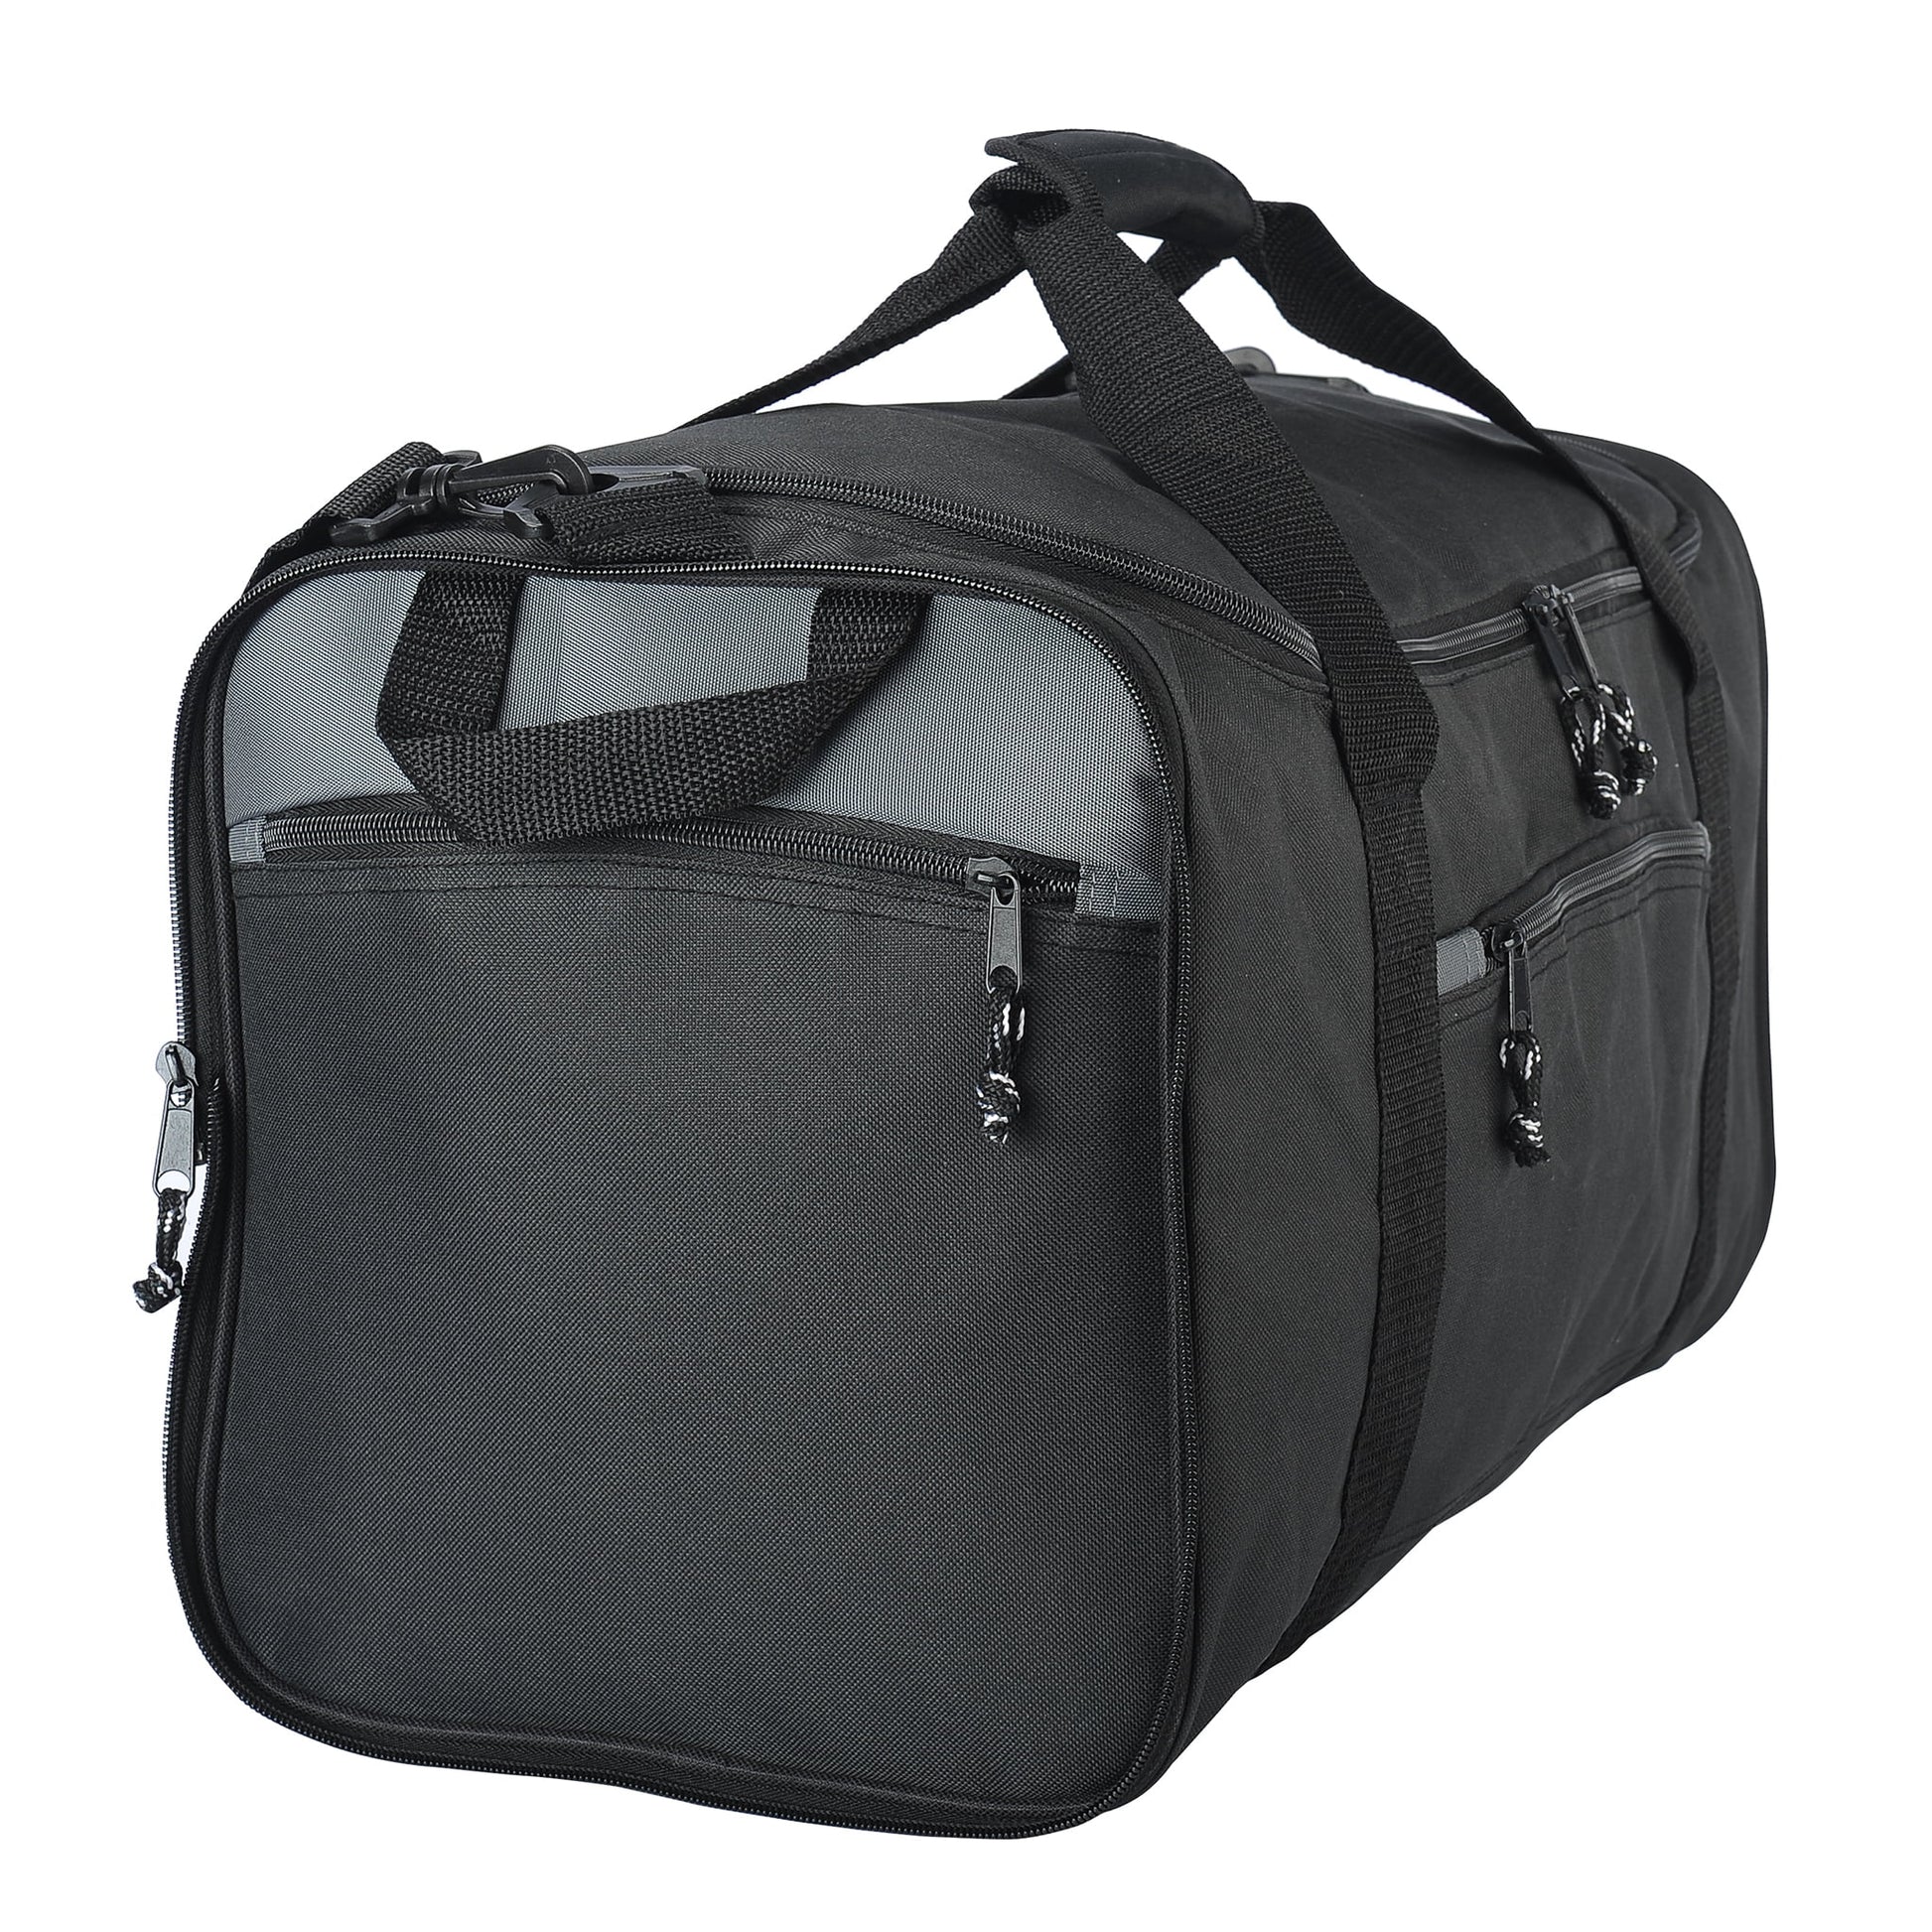 Protégé 28 Sport and Travel Duffel Bag, Black 